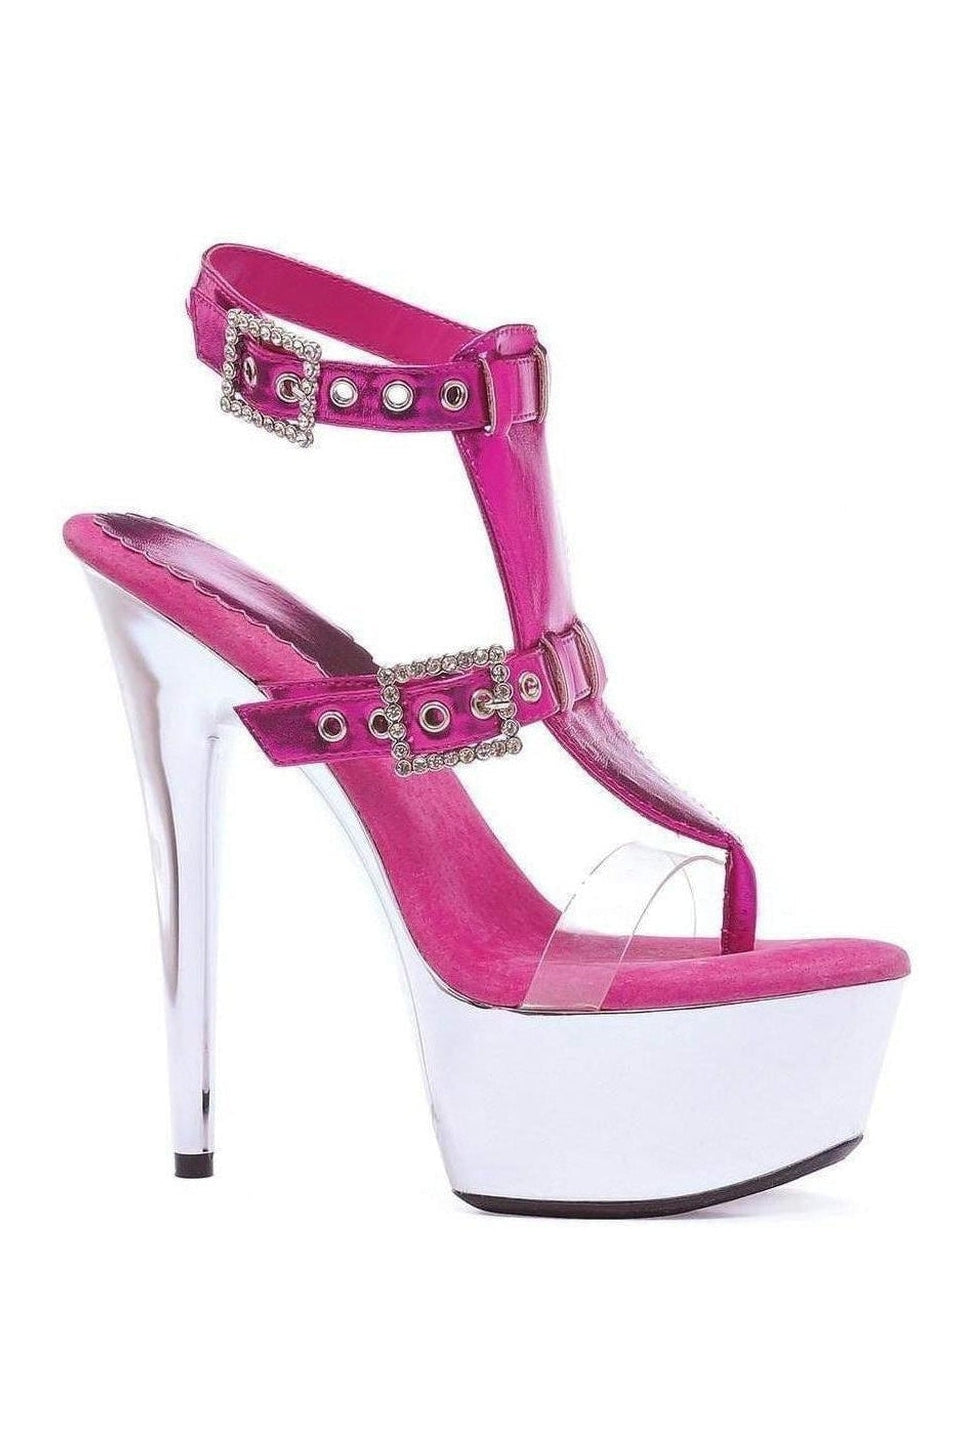 609-GENEVA Platform Sandal | Fuchsia Patent-Ellie Shoes-Fuchsia-Sandals-SEXYSHOES.COM